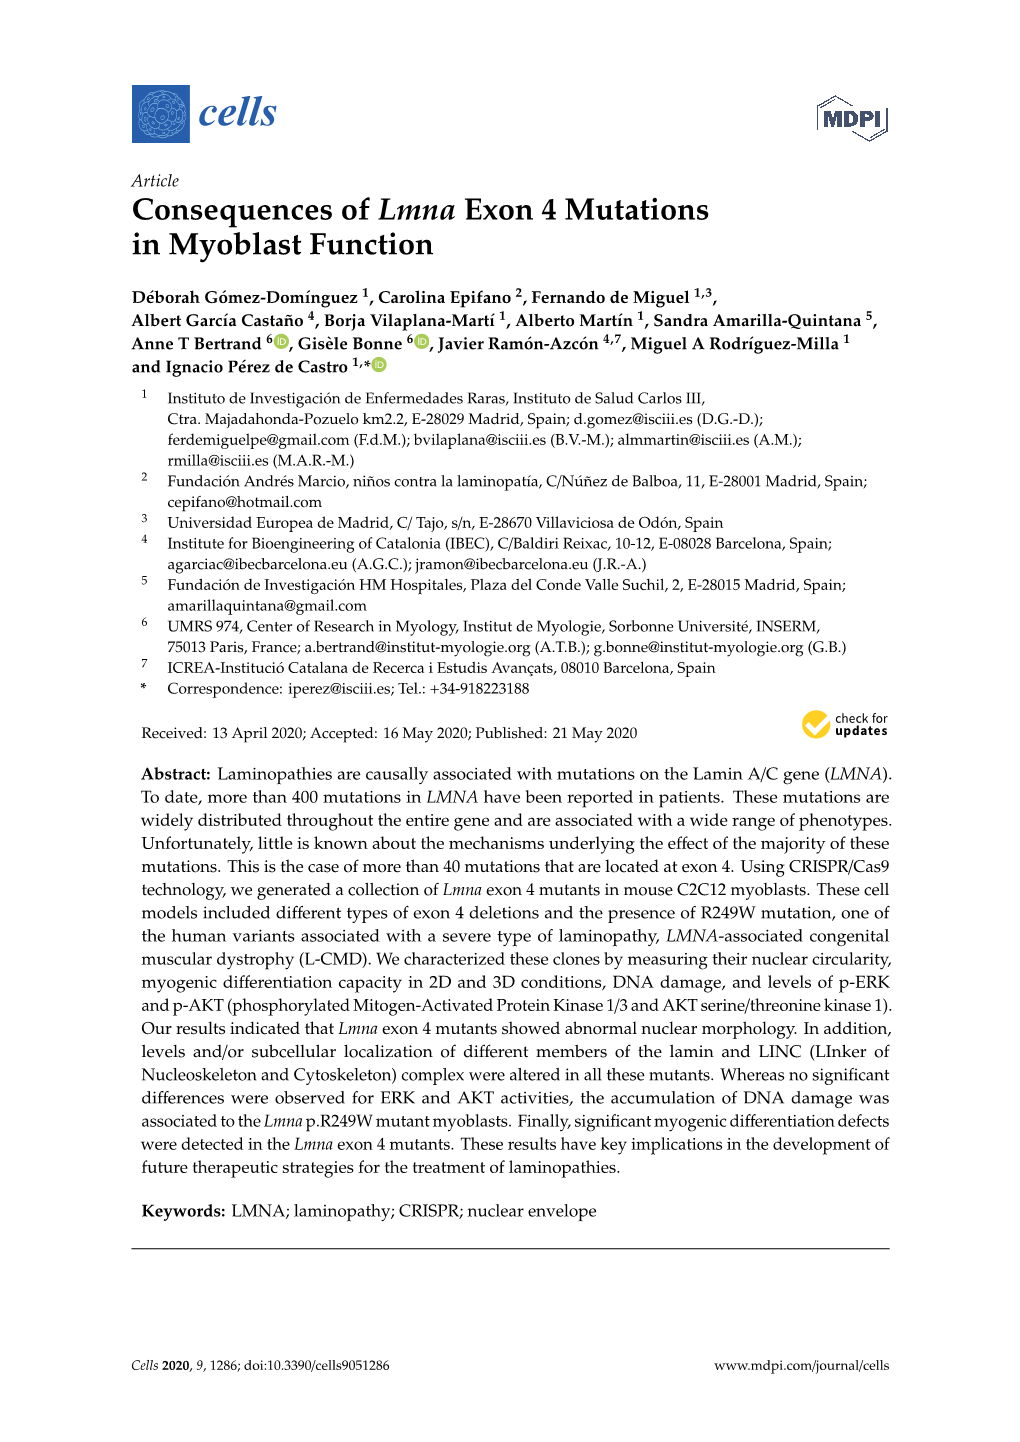 Consequences of Lmna Exon 4 Mutations in Myoblast Function